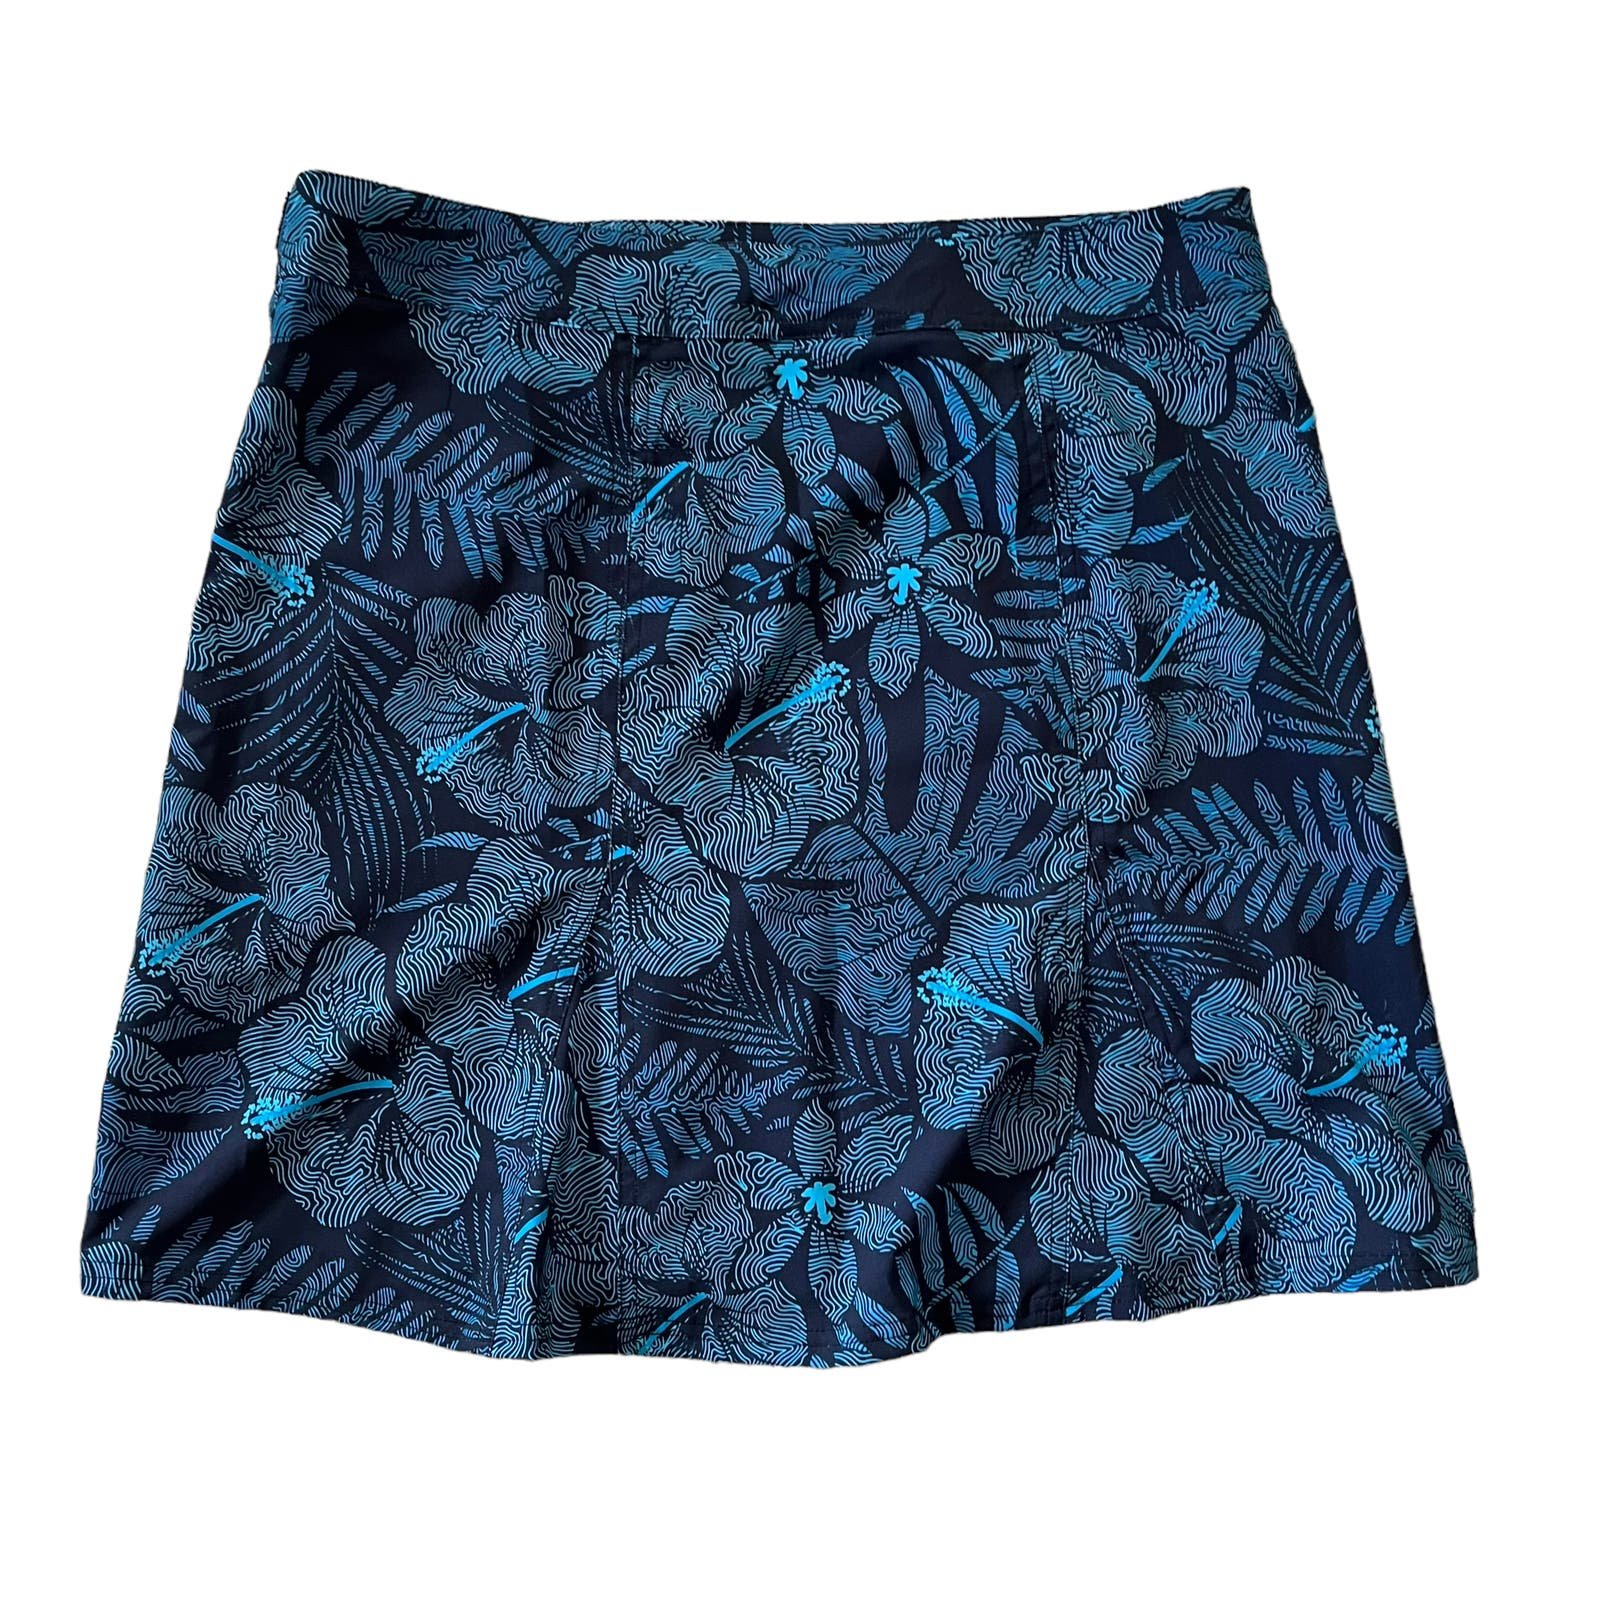 The Best Seller Rip Skirt Hawaii Blue Floral Wrap Skirt Size Large EUC kiBIJCWqh High Quaity